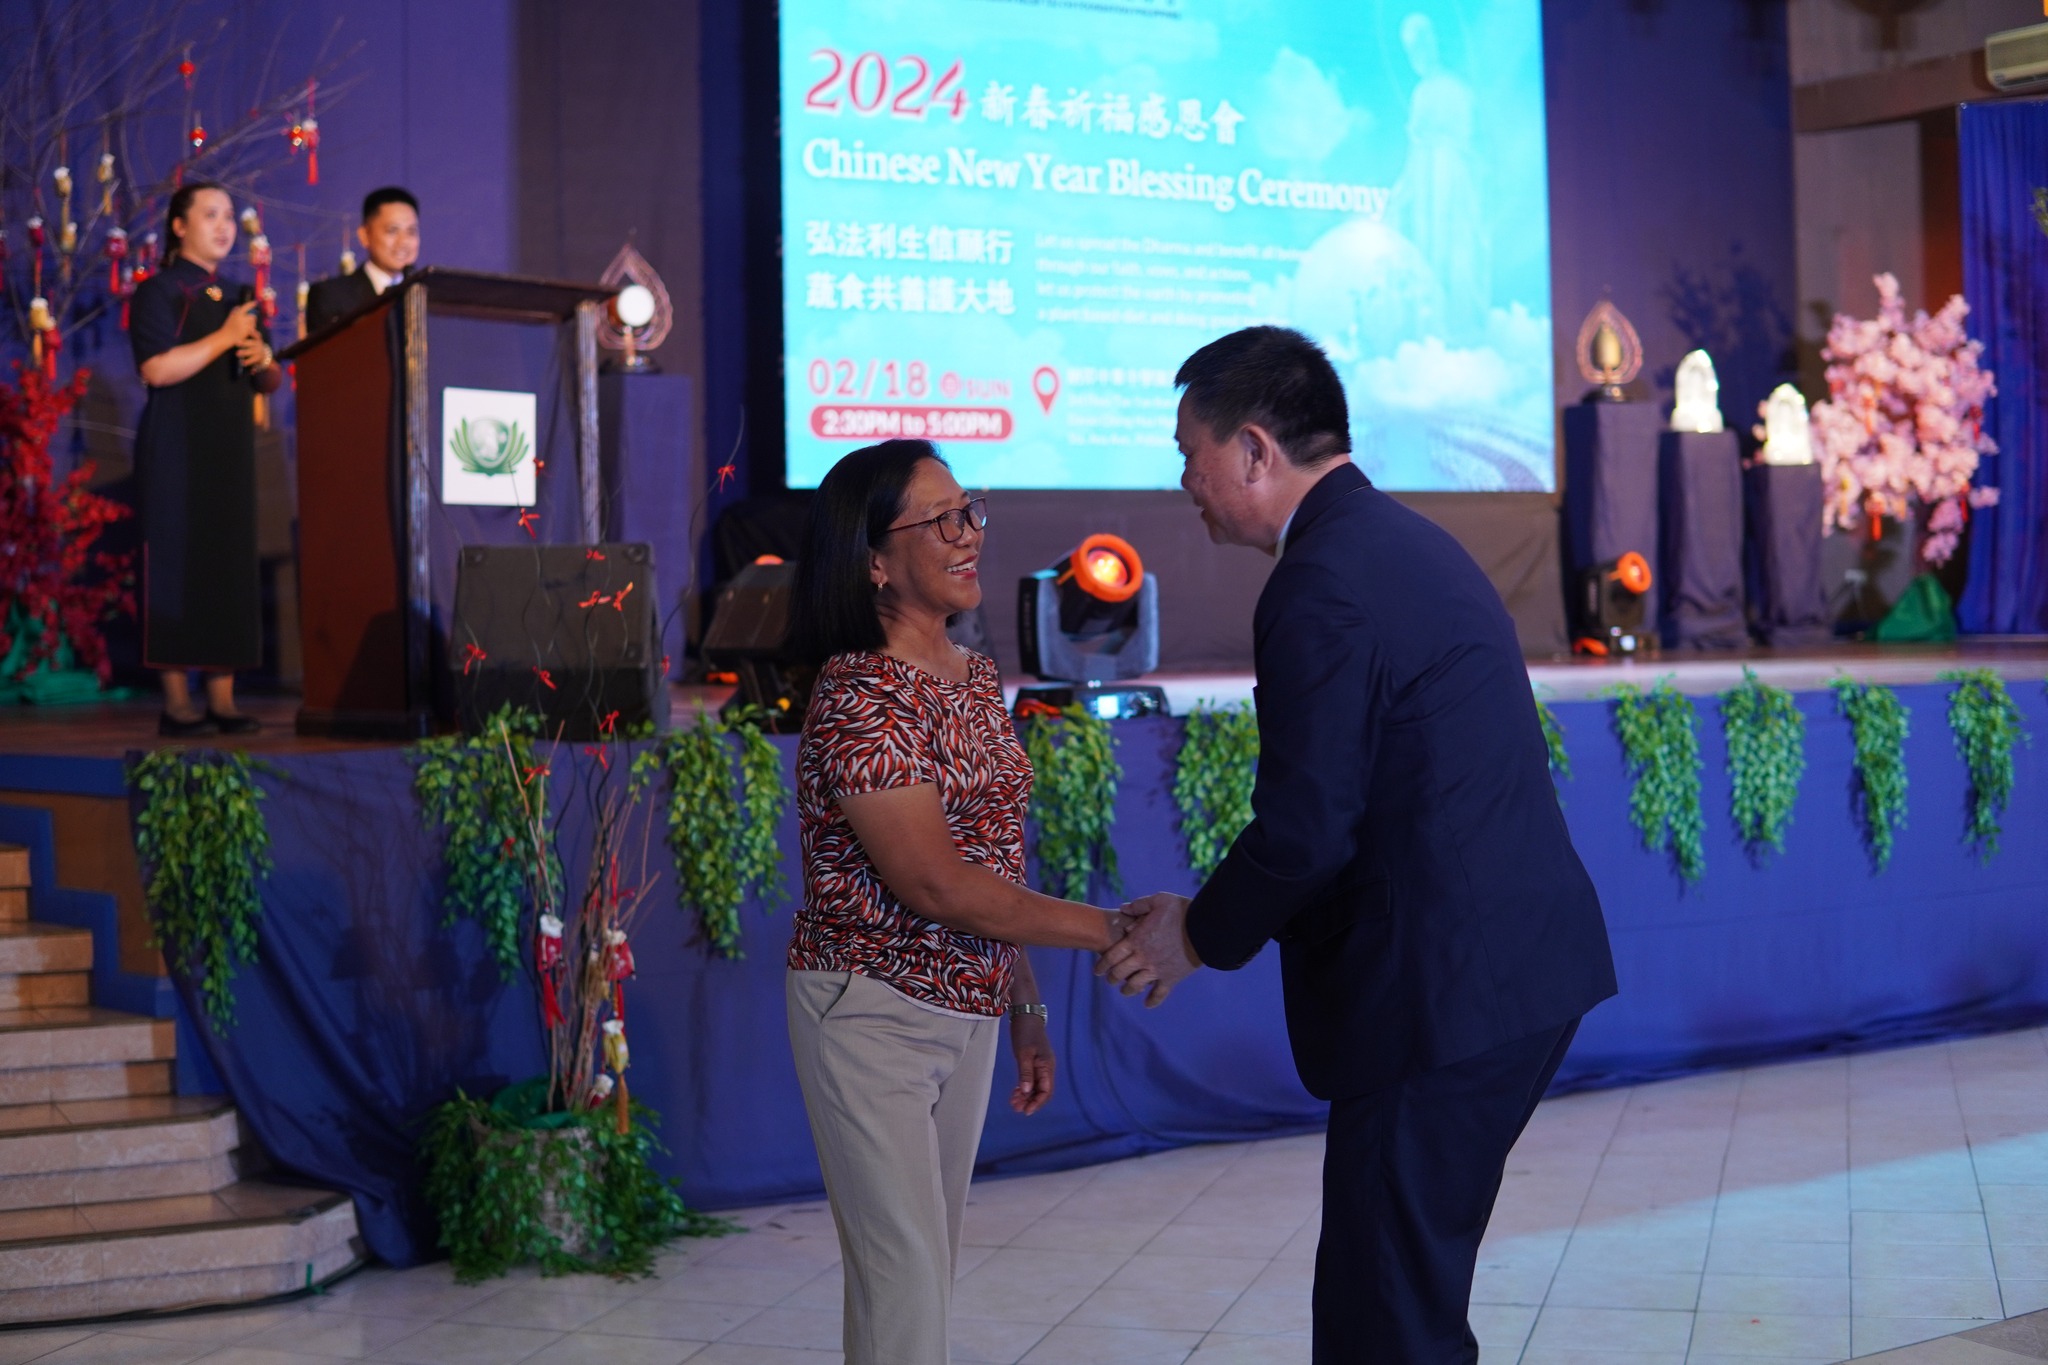 Mayor Timbol and Tzu Chi Davao-OIC Bro. Chua shake hands after her speech.【Photo by Tzu Chi Davao】